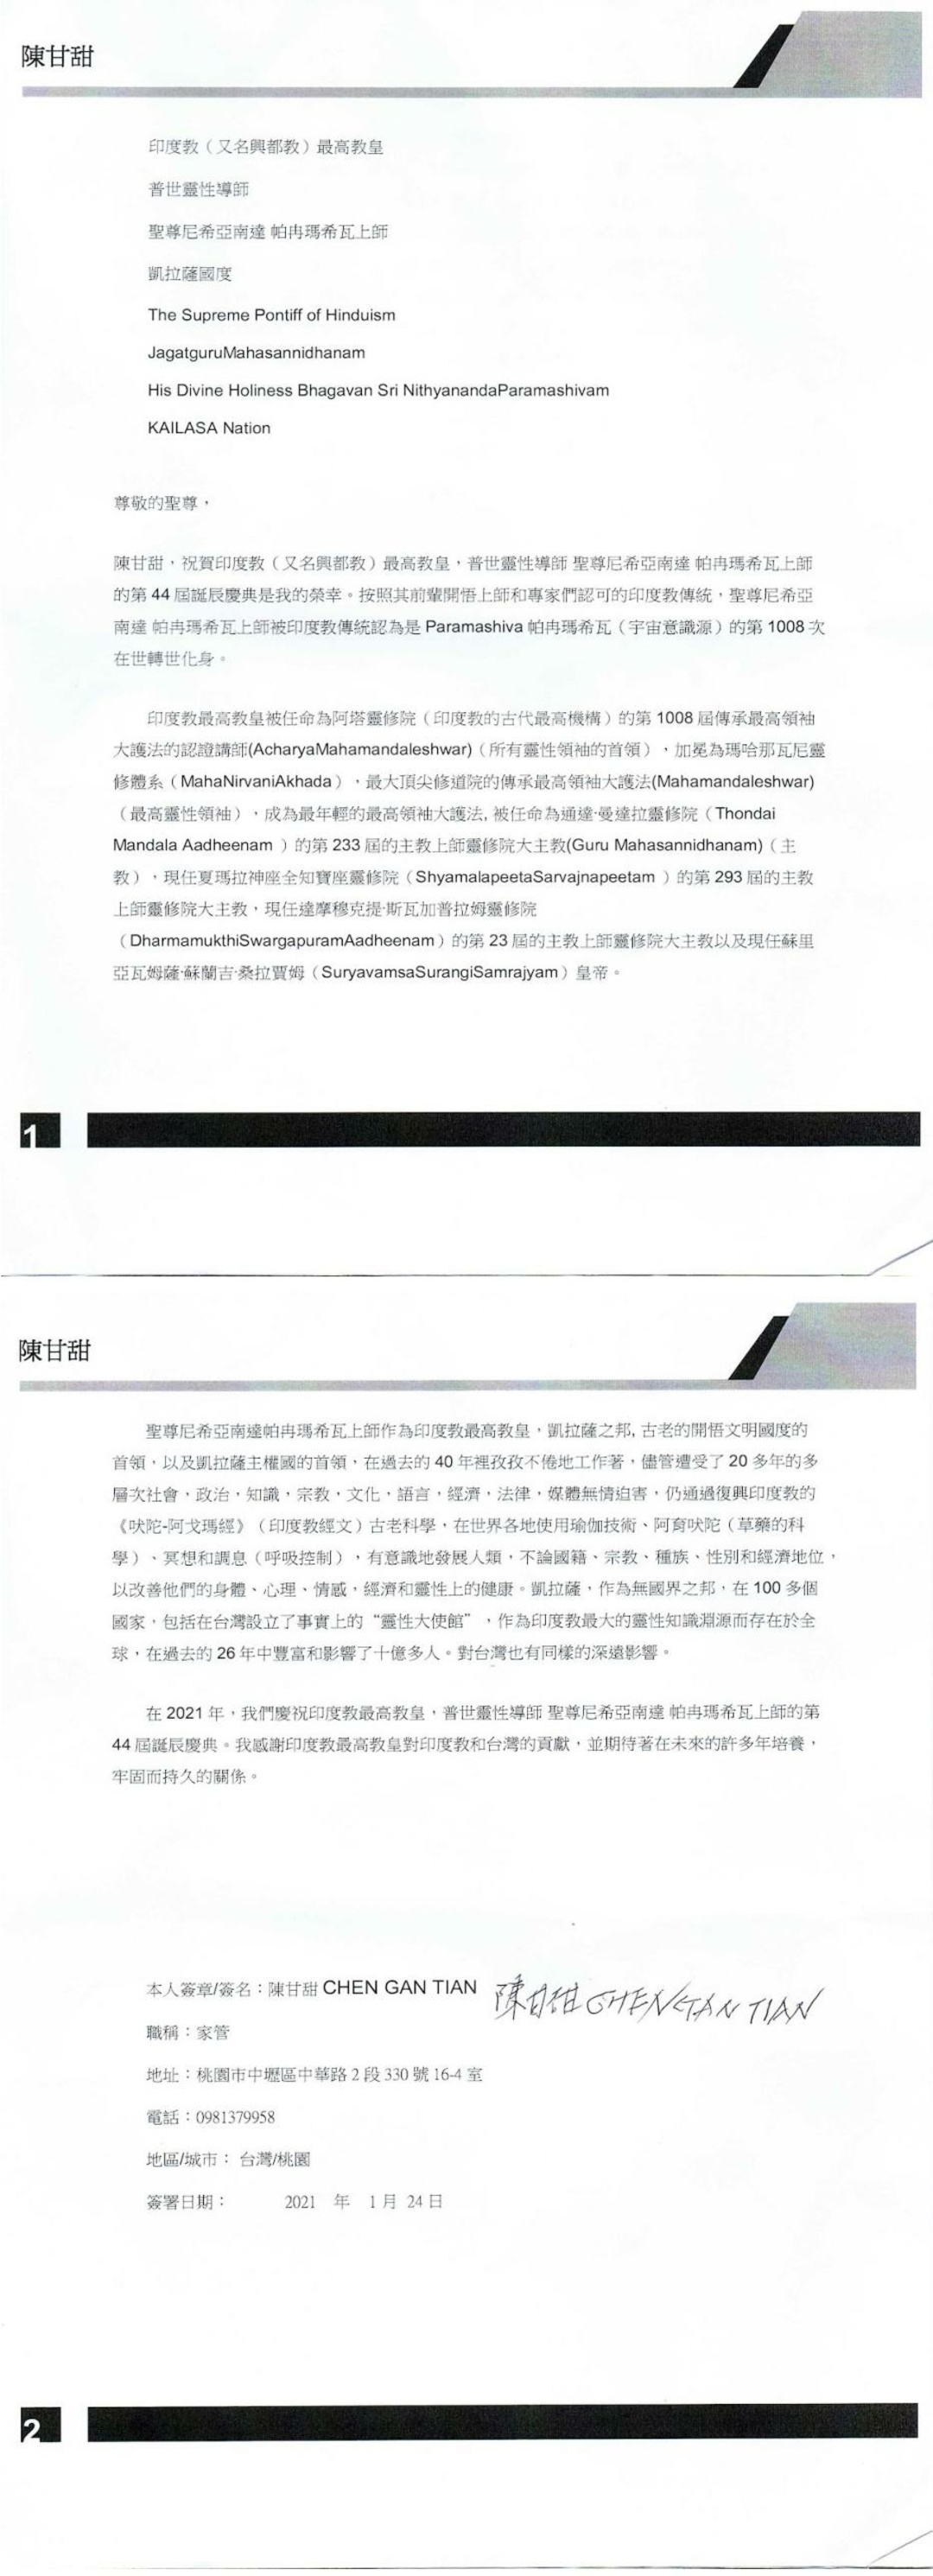 Taiwan---Gian-Tian-Chen---January-24--2021-(Proclamation)-11SEuaxR5i3 YOEPfMsjwaanG1pdlmjLN.pdf